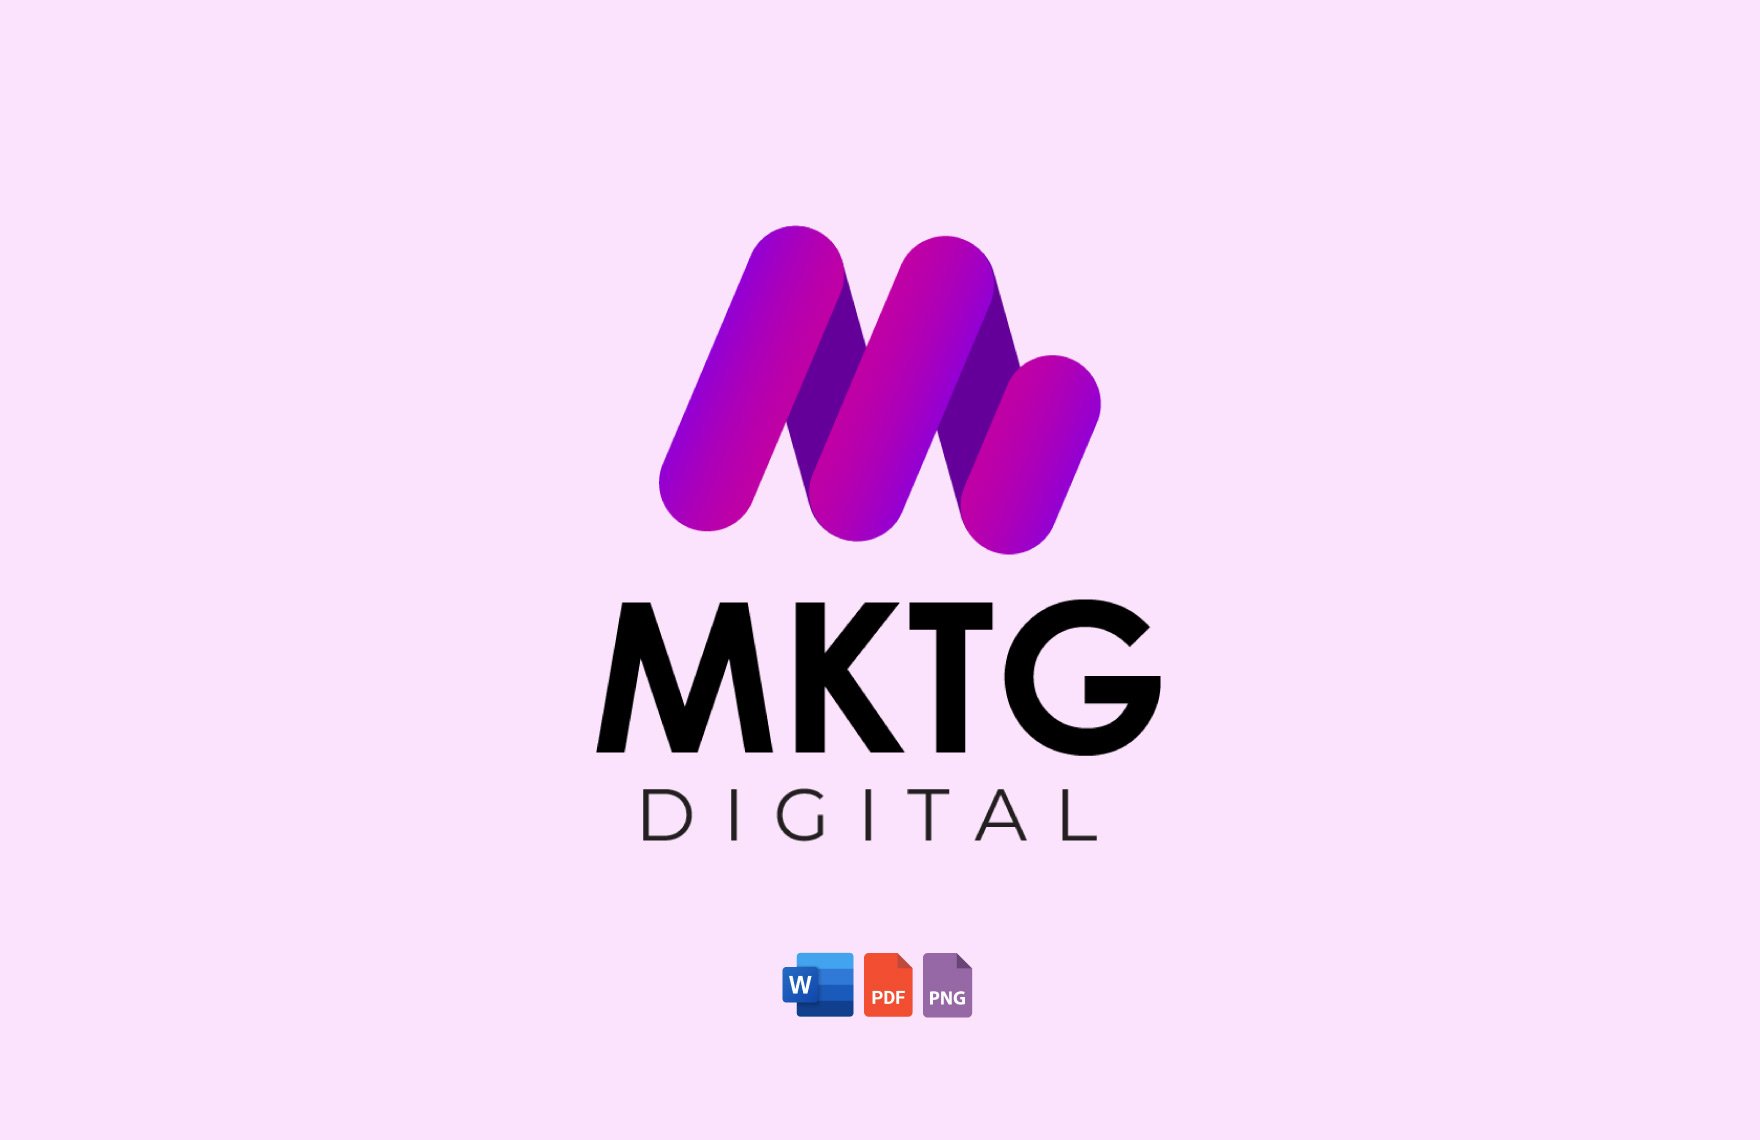 Digital Marketing Agency Primary Logo Template